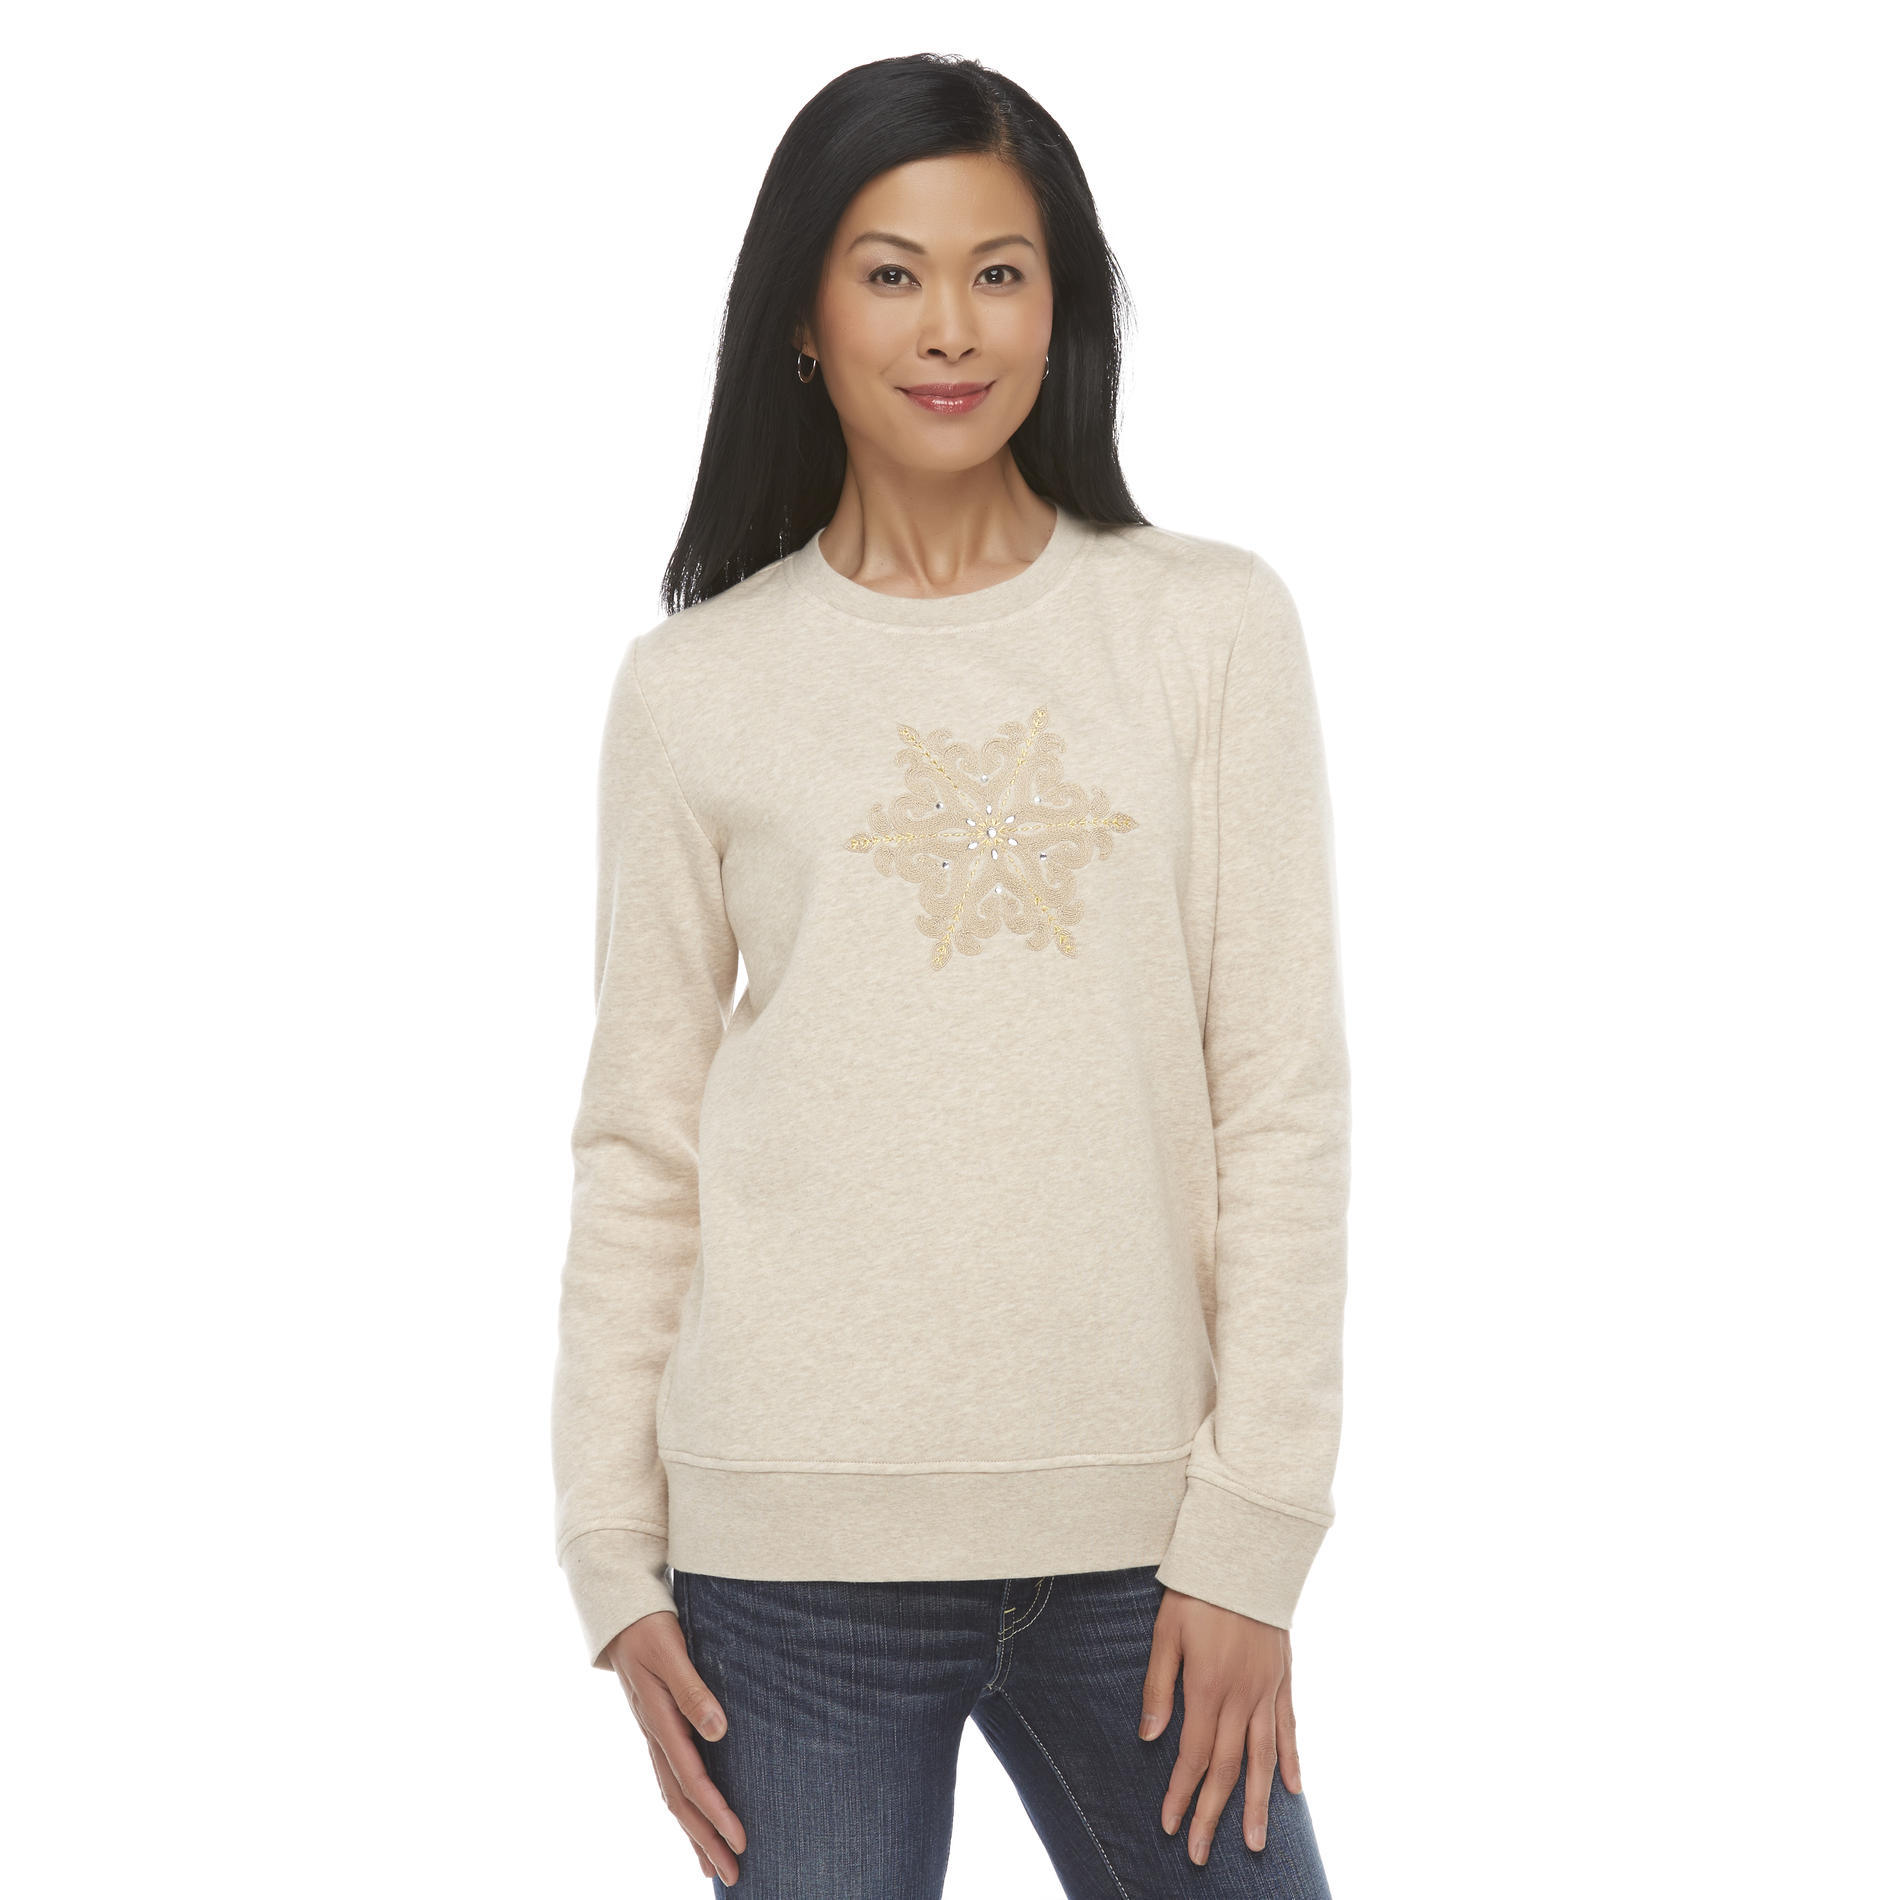 Laura Scott Women's Embellished Sweatshirt - Snowflake